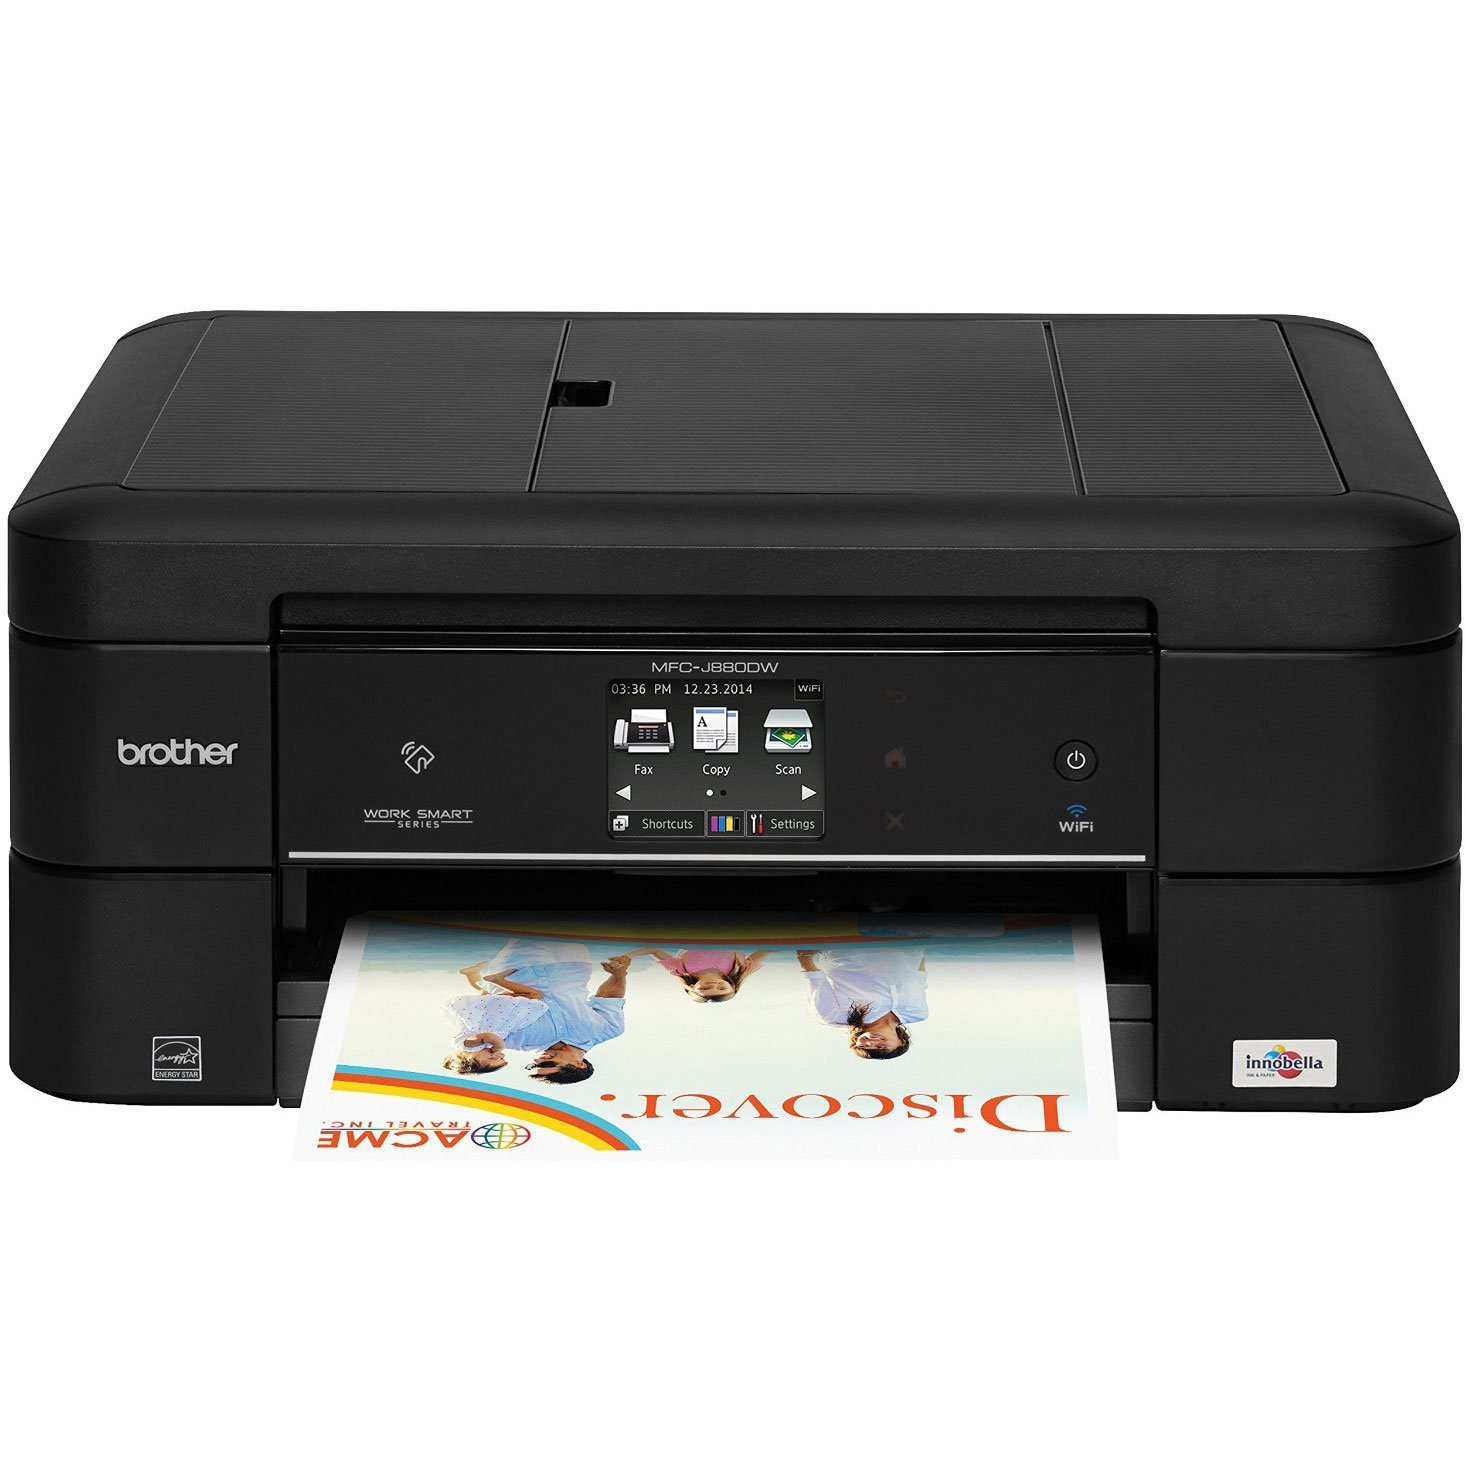 Brother Printer طابعة Brother MFC-J885DW Work Smart Inkjet الكل في واحد